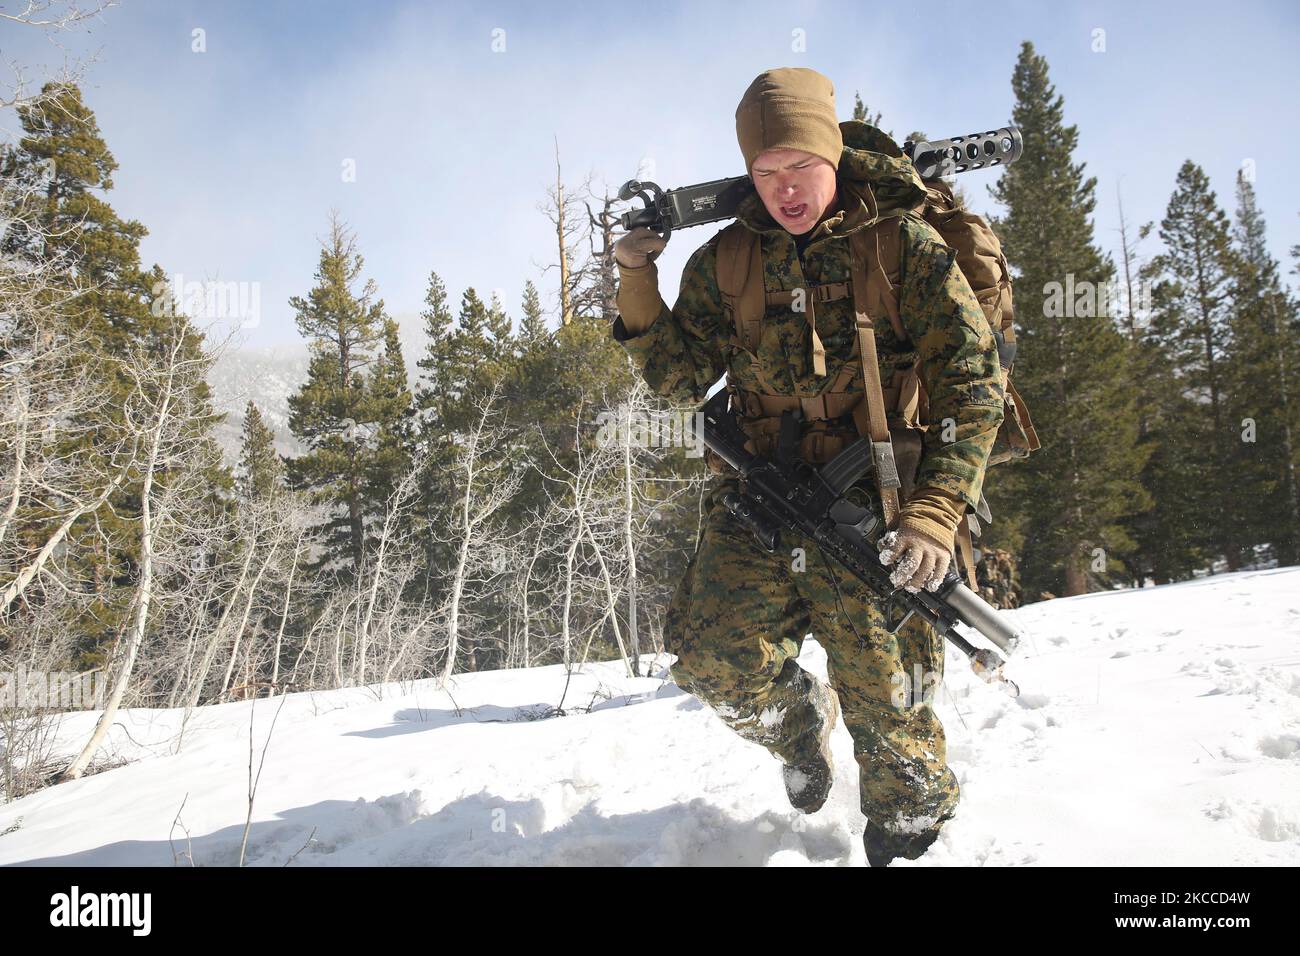 U.S. Marine carries the receiver of a .50 caliber machine gun as he trudges through snow. Stock Photo